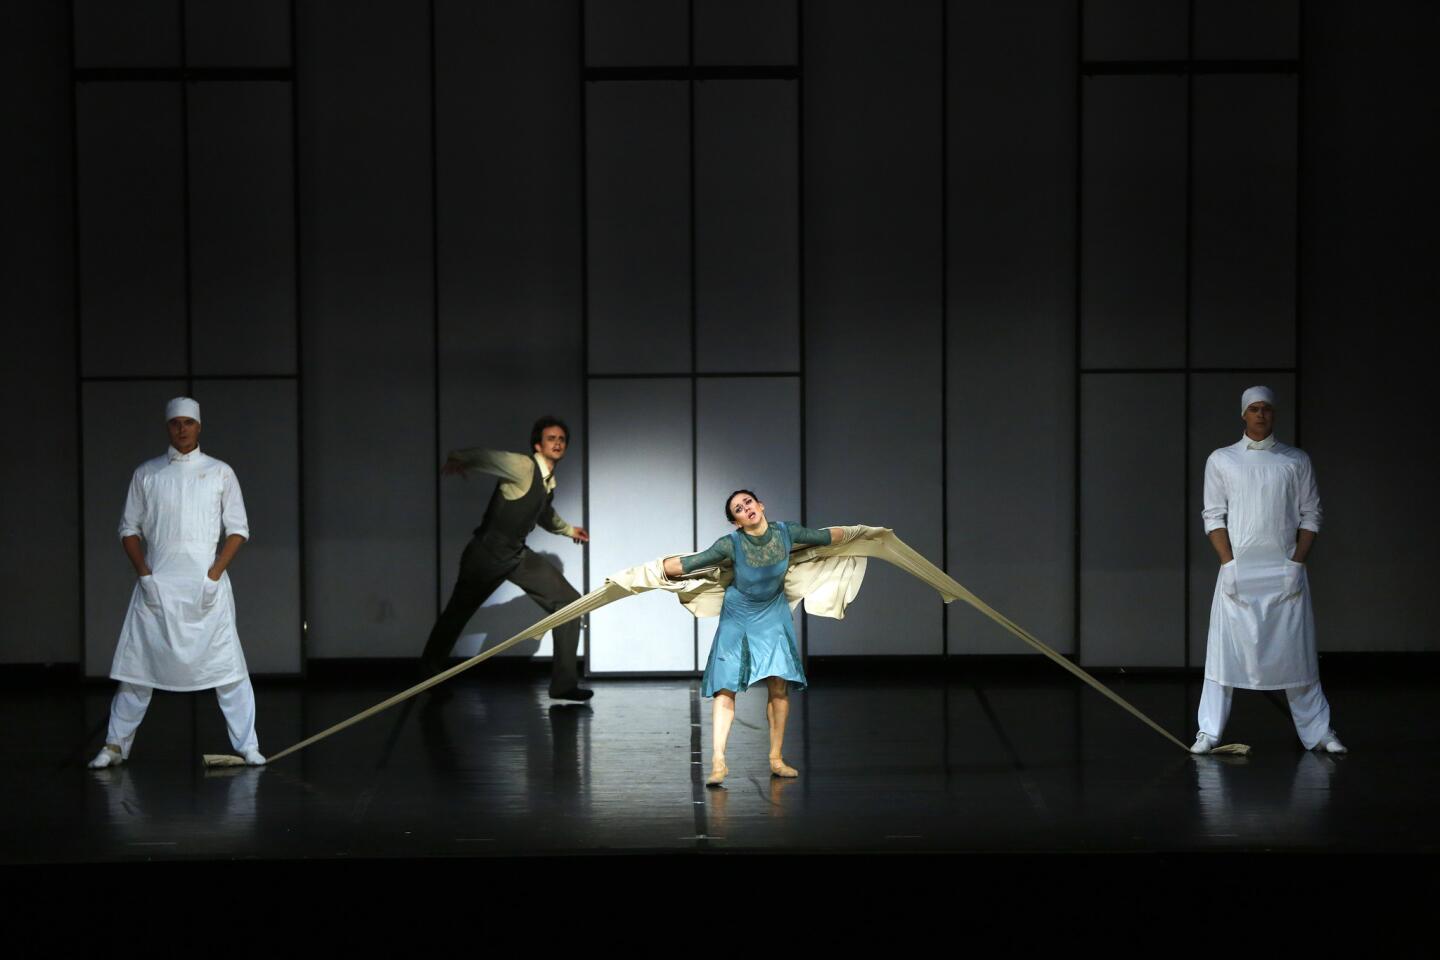 Eifman Ballet of Saint Petersburg